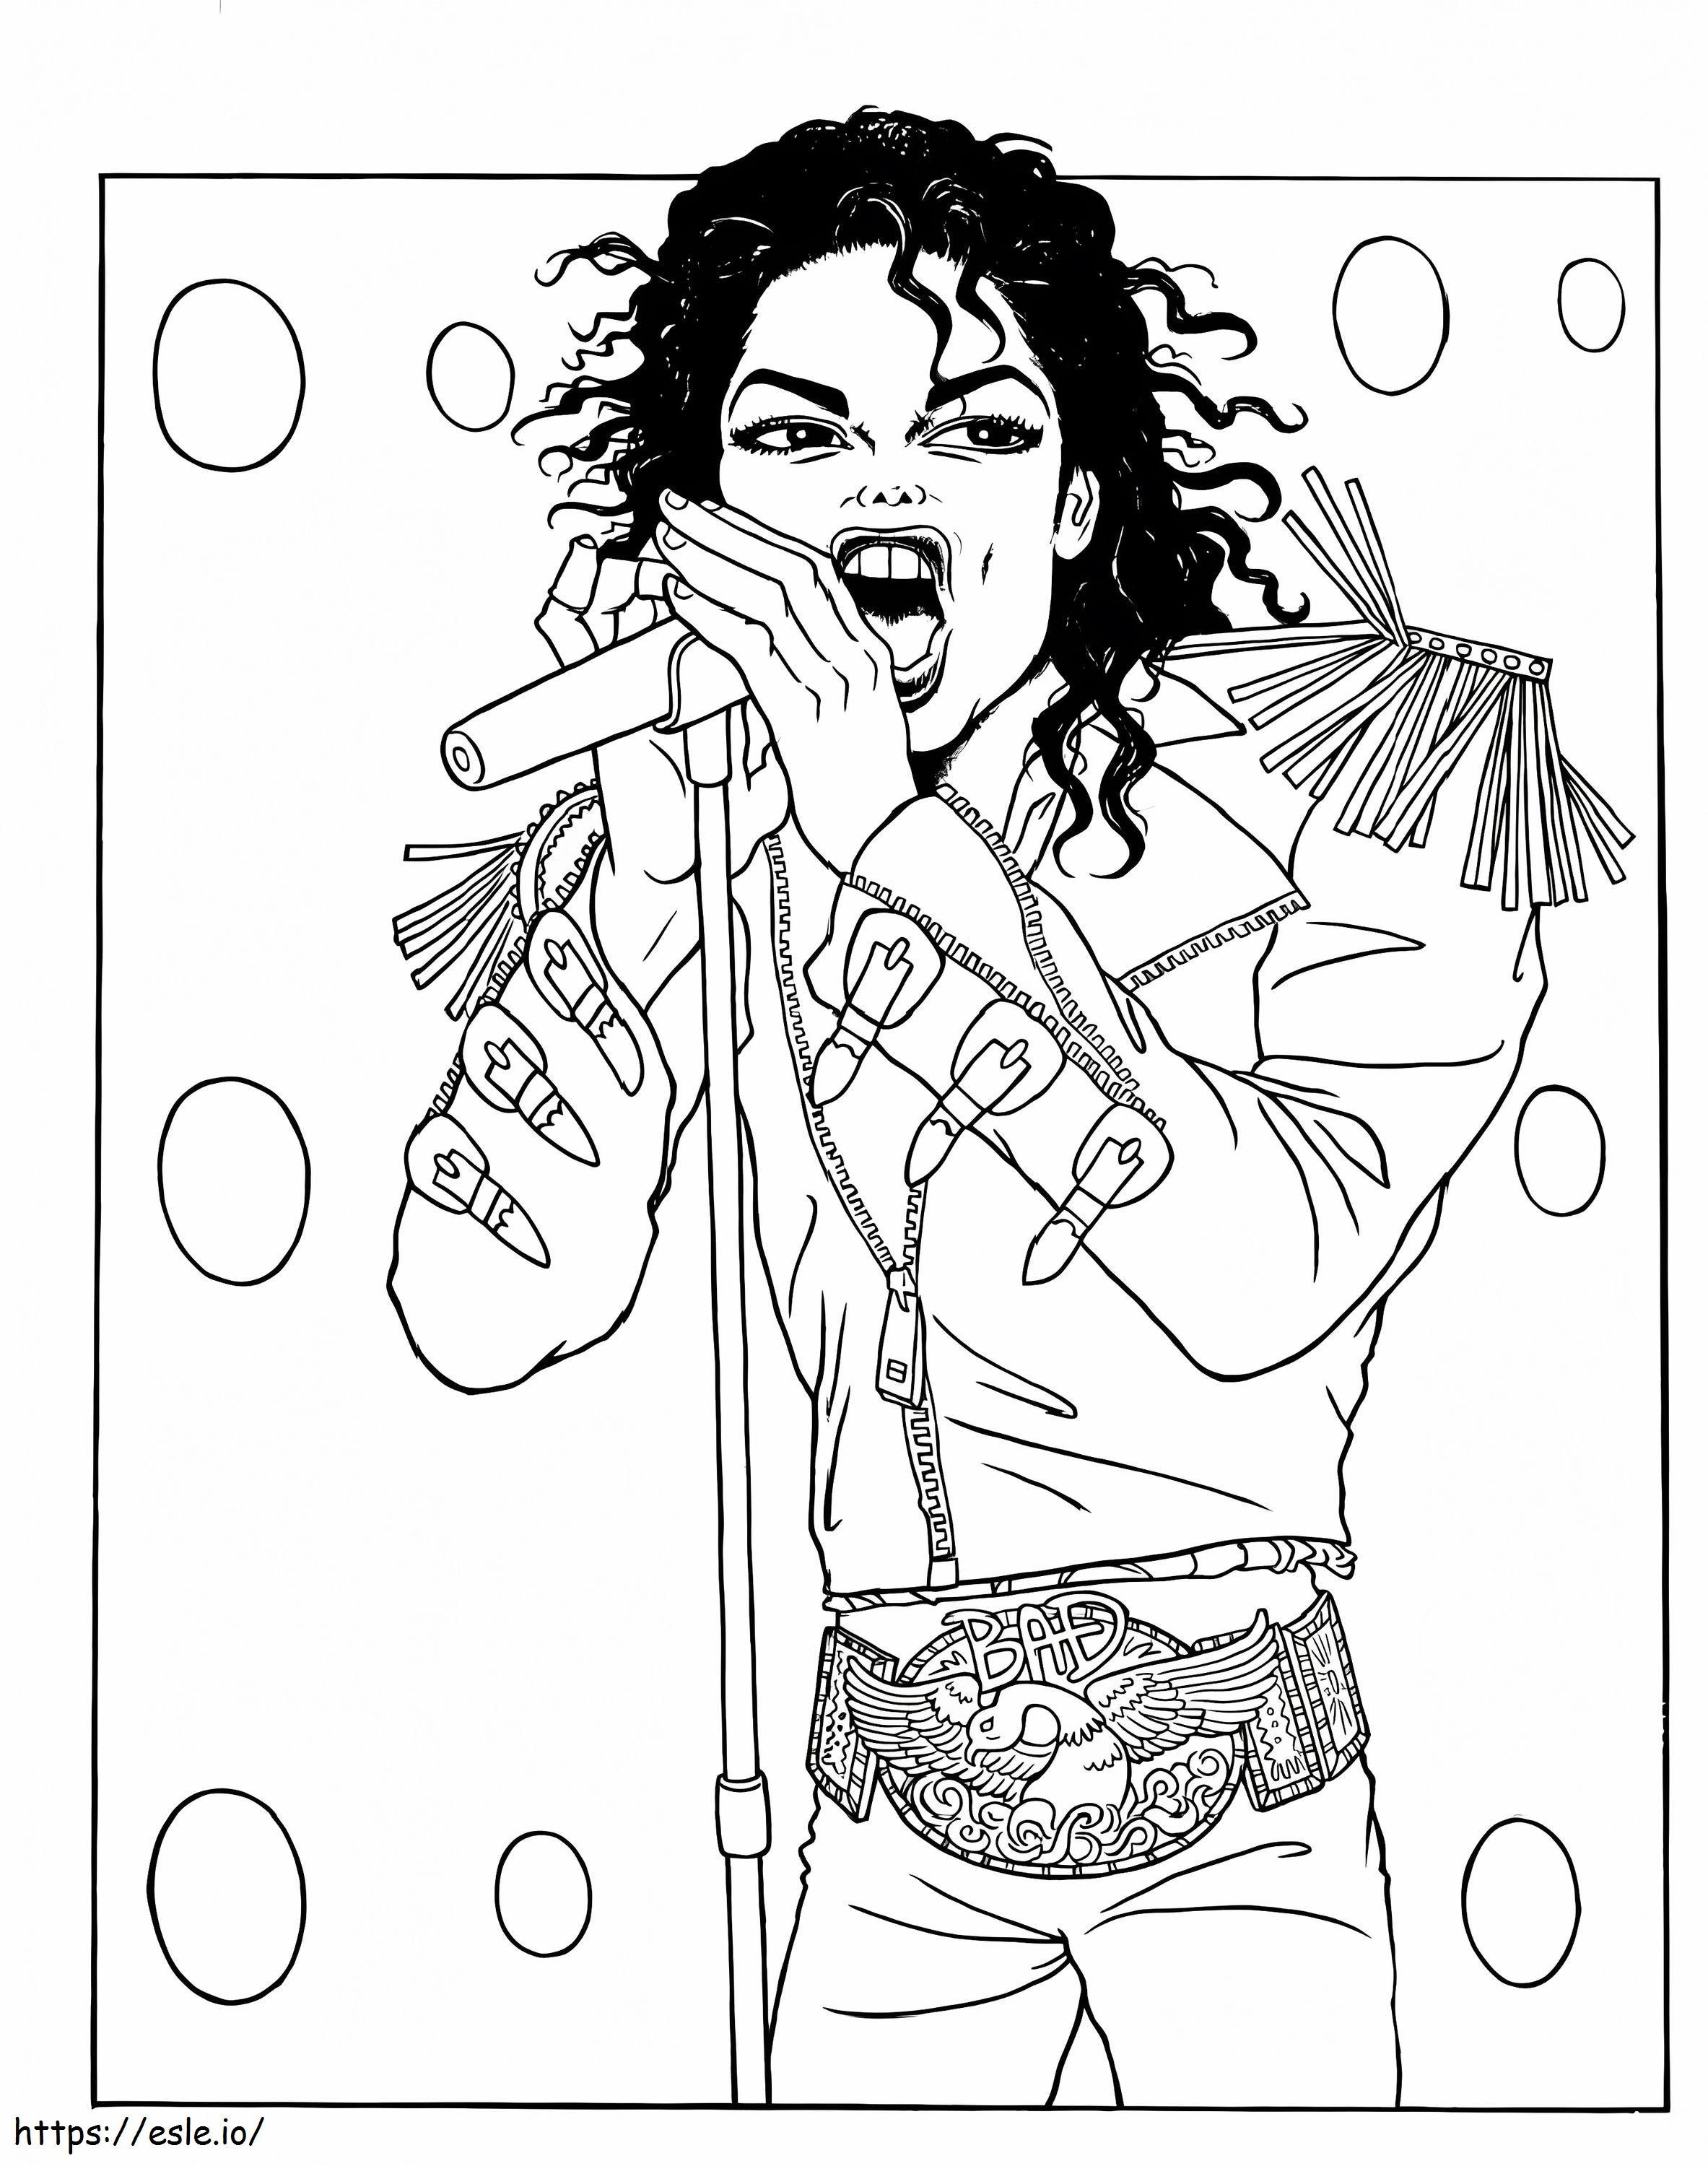 Genial Michael Jackson cantando para colorear